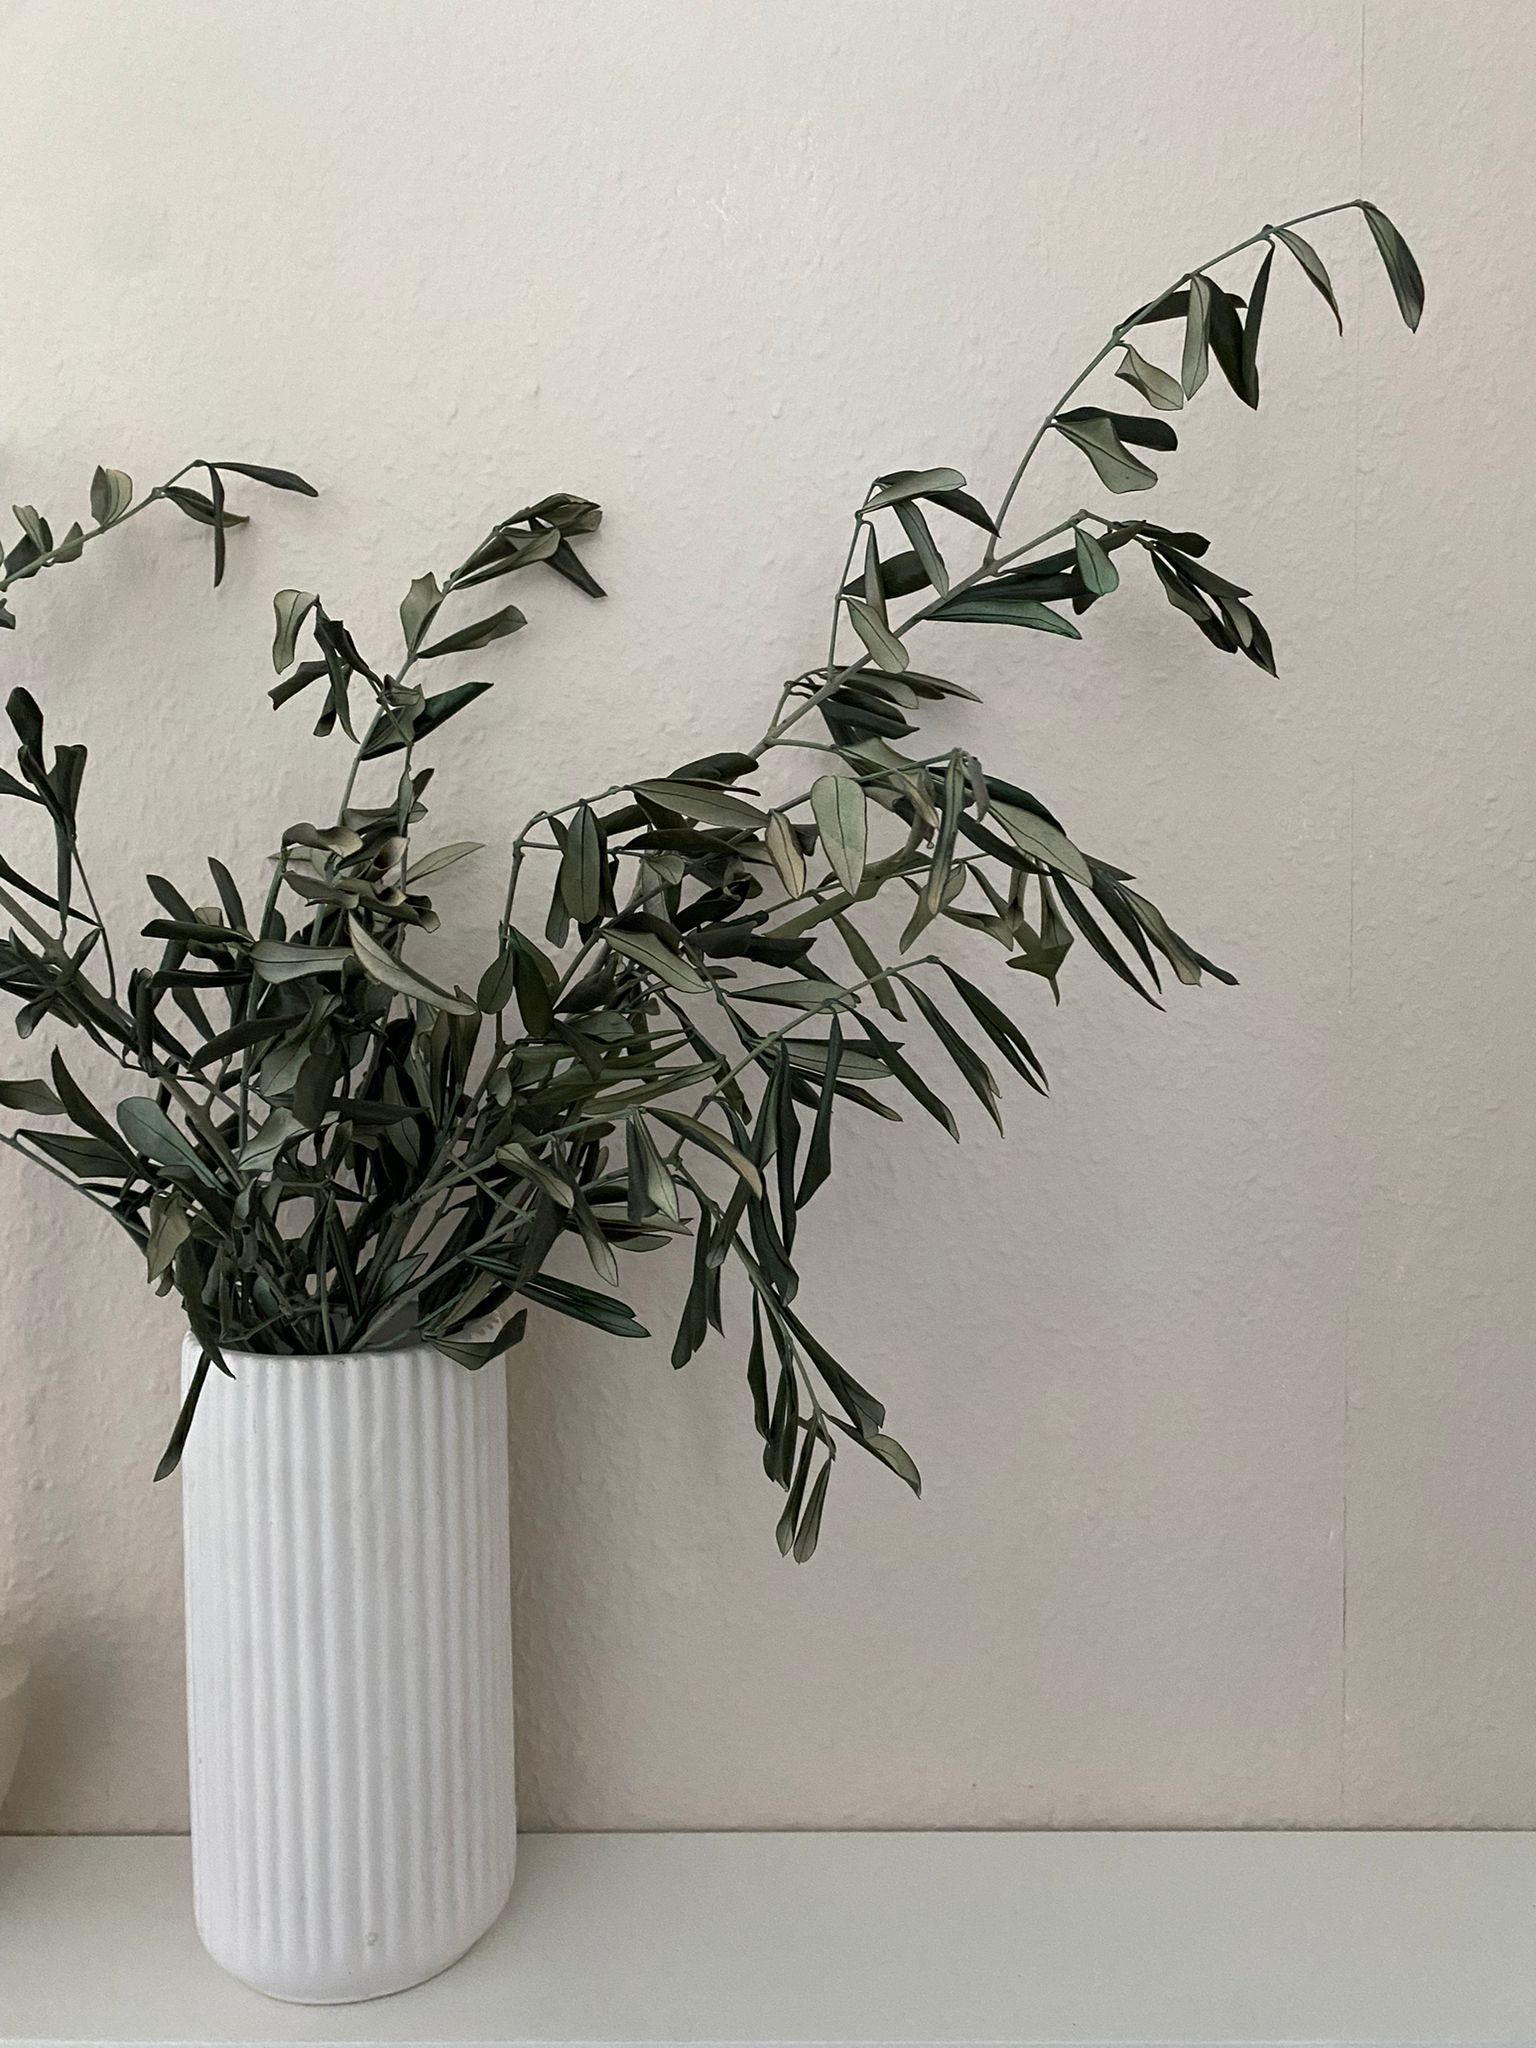 Olivenzweige konserviert - Trockenblumen